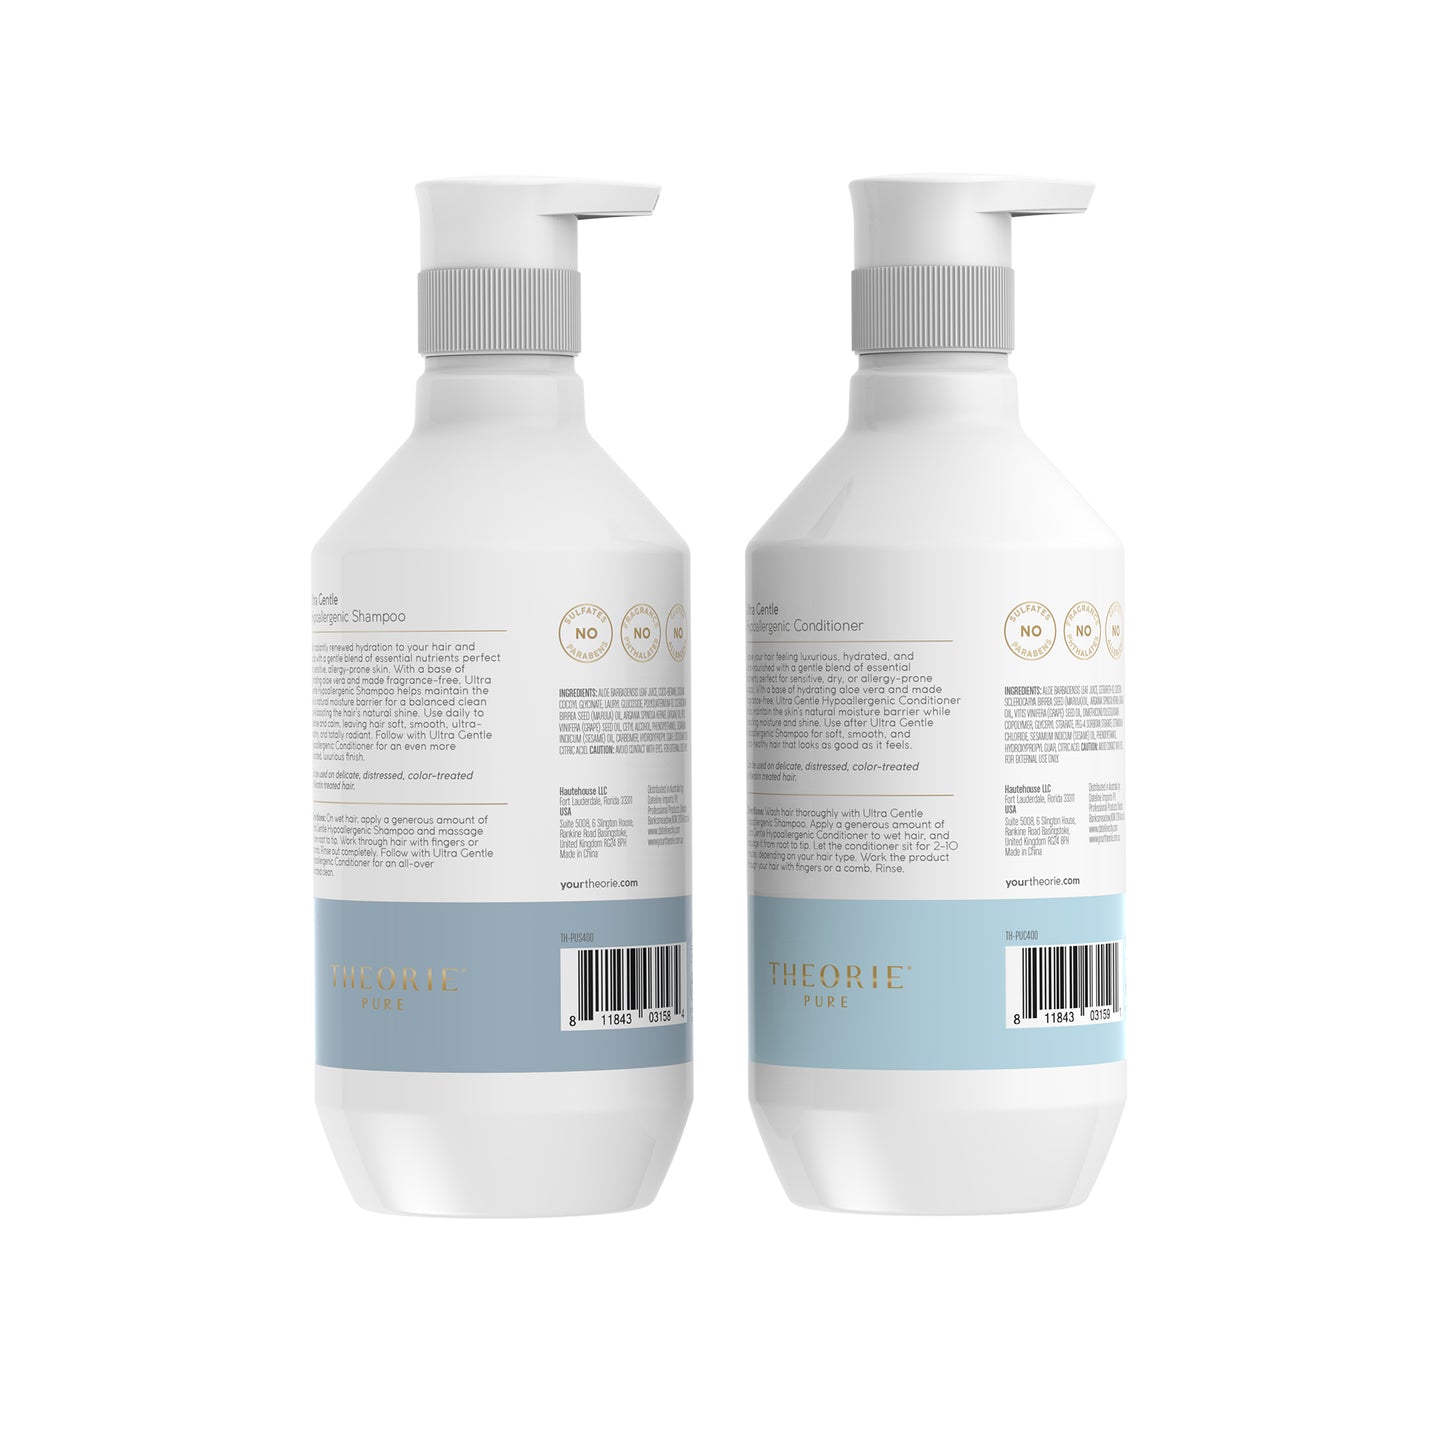 Ultra Gentle Hypoallergenic Shampoo & Conditioner Set